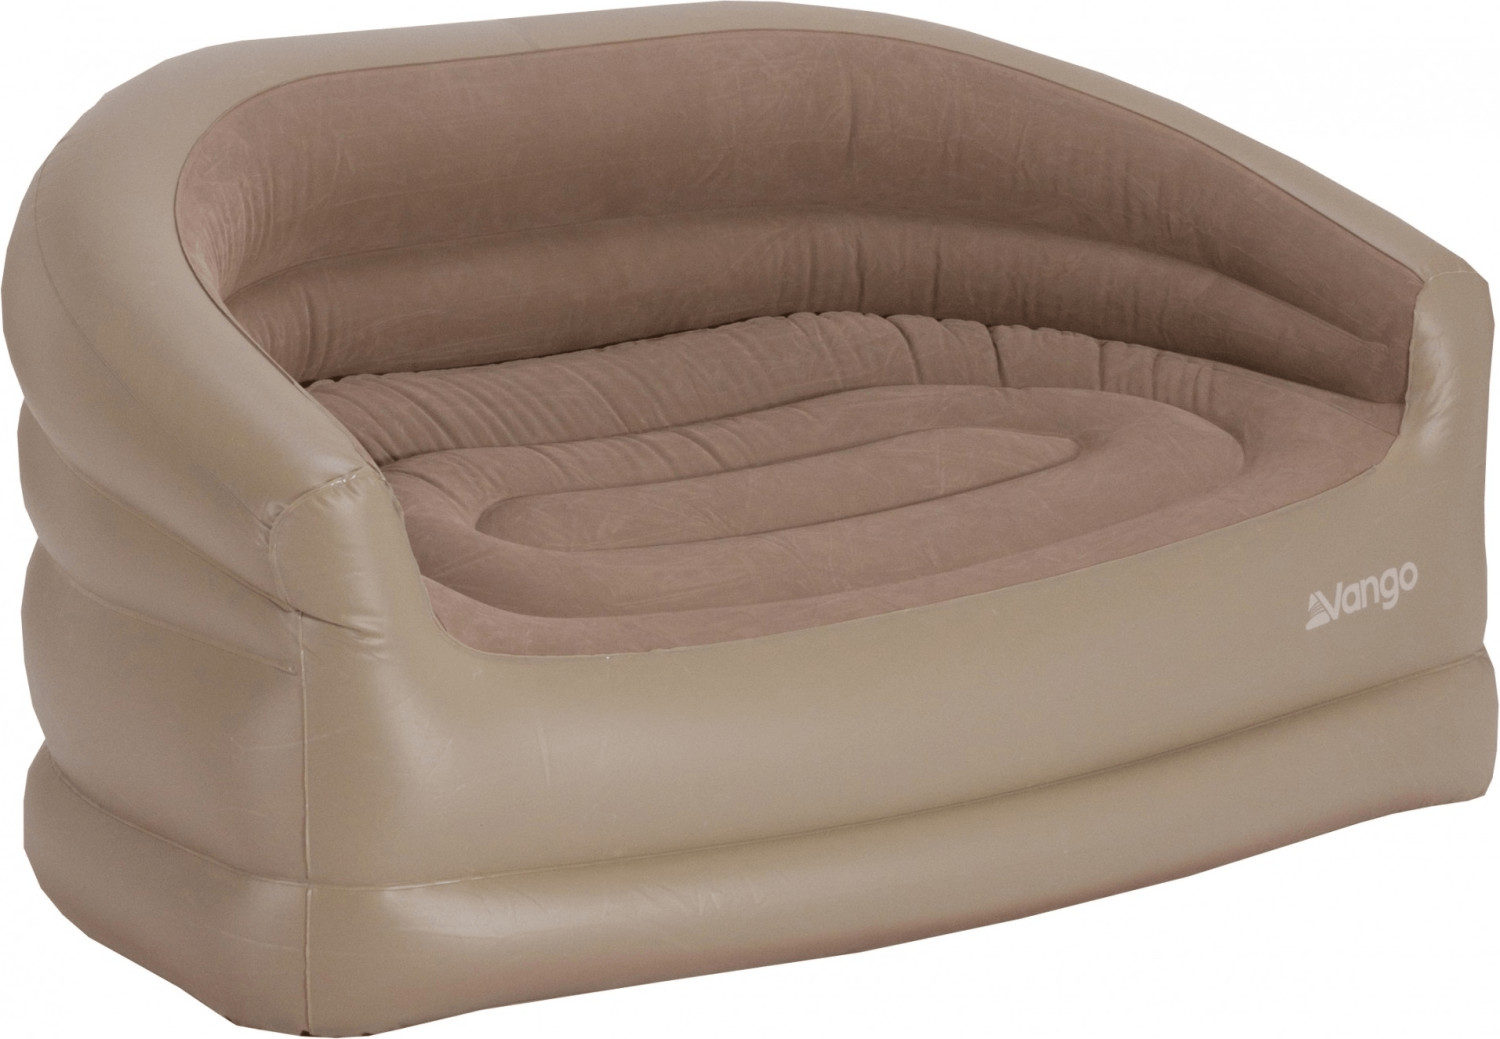 Photos - Outdoor Furniture Vango Inflatable Sofa 